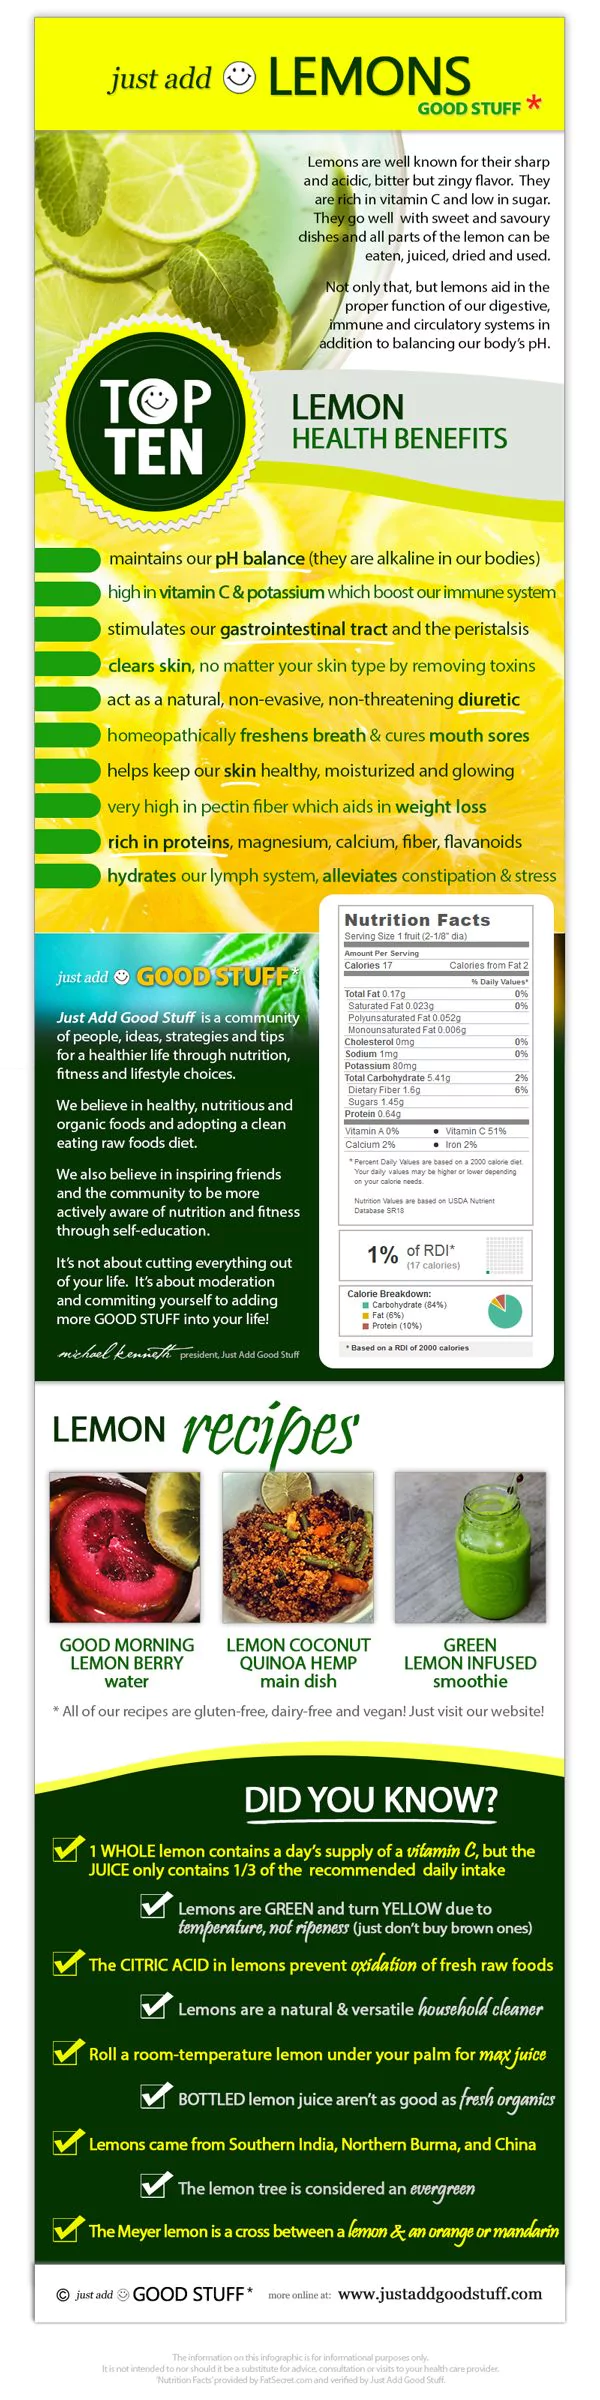 Top 10 Lemon Health Benefits